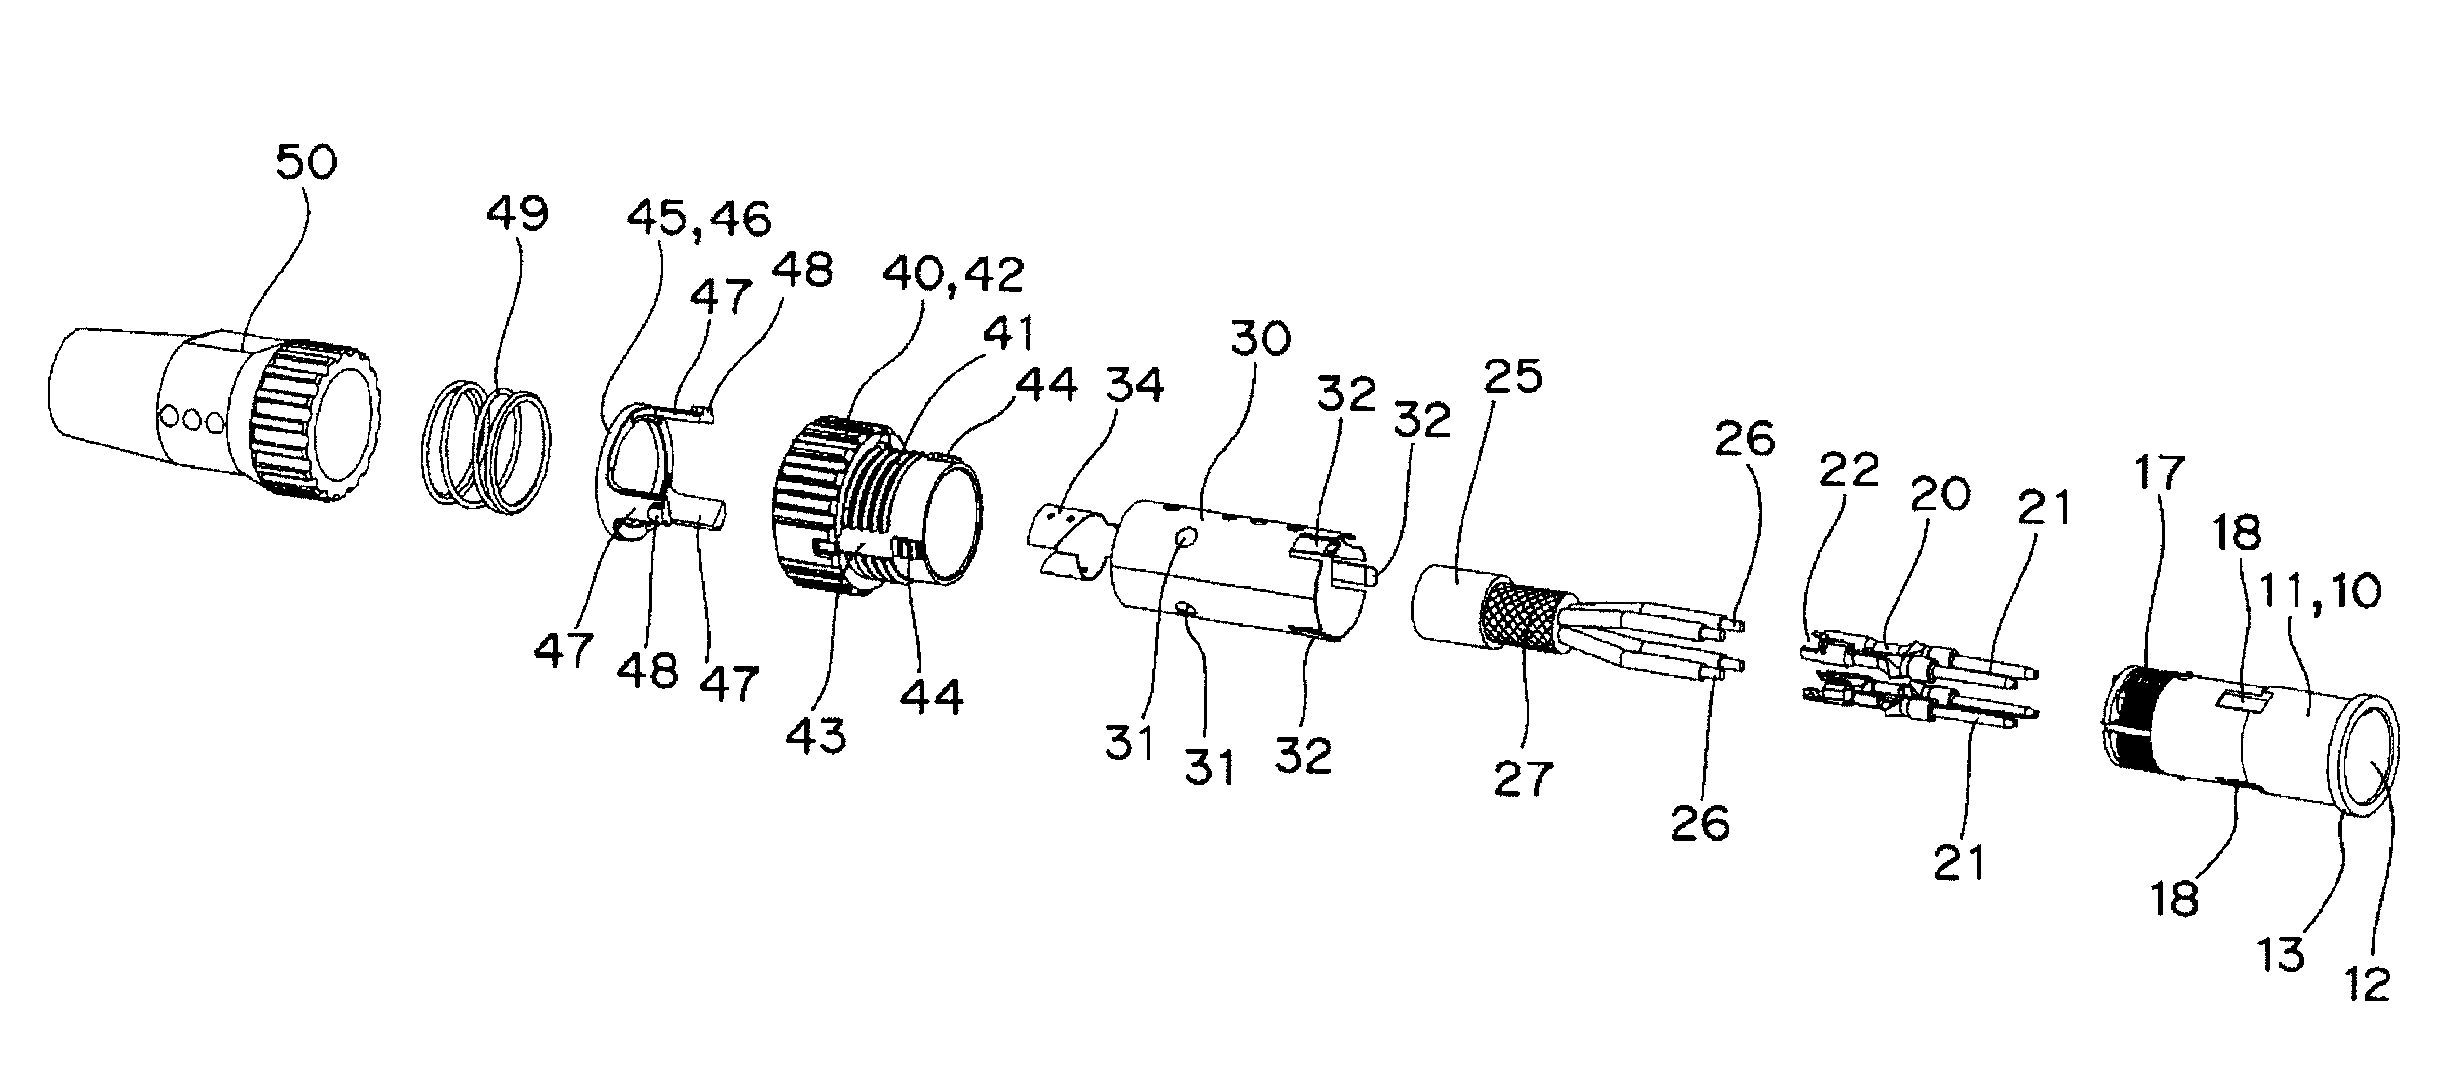 Connector having a plug, a socket, and a tubular shield member with an elastic arm